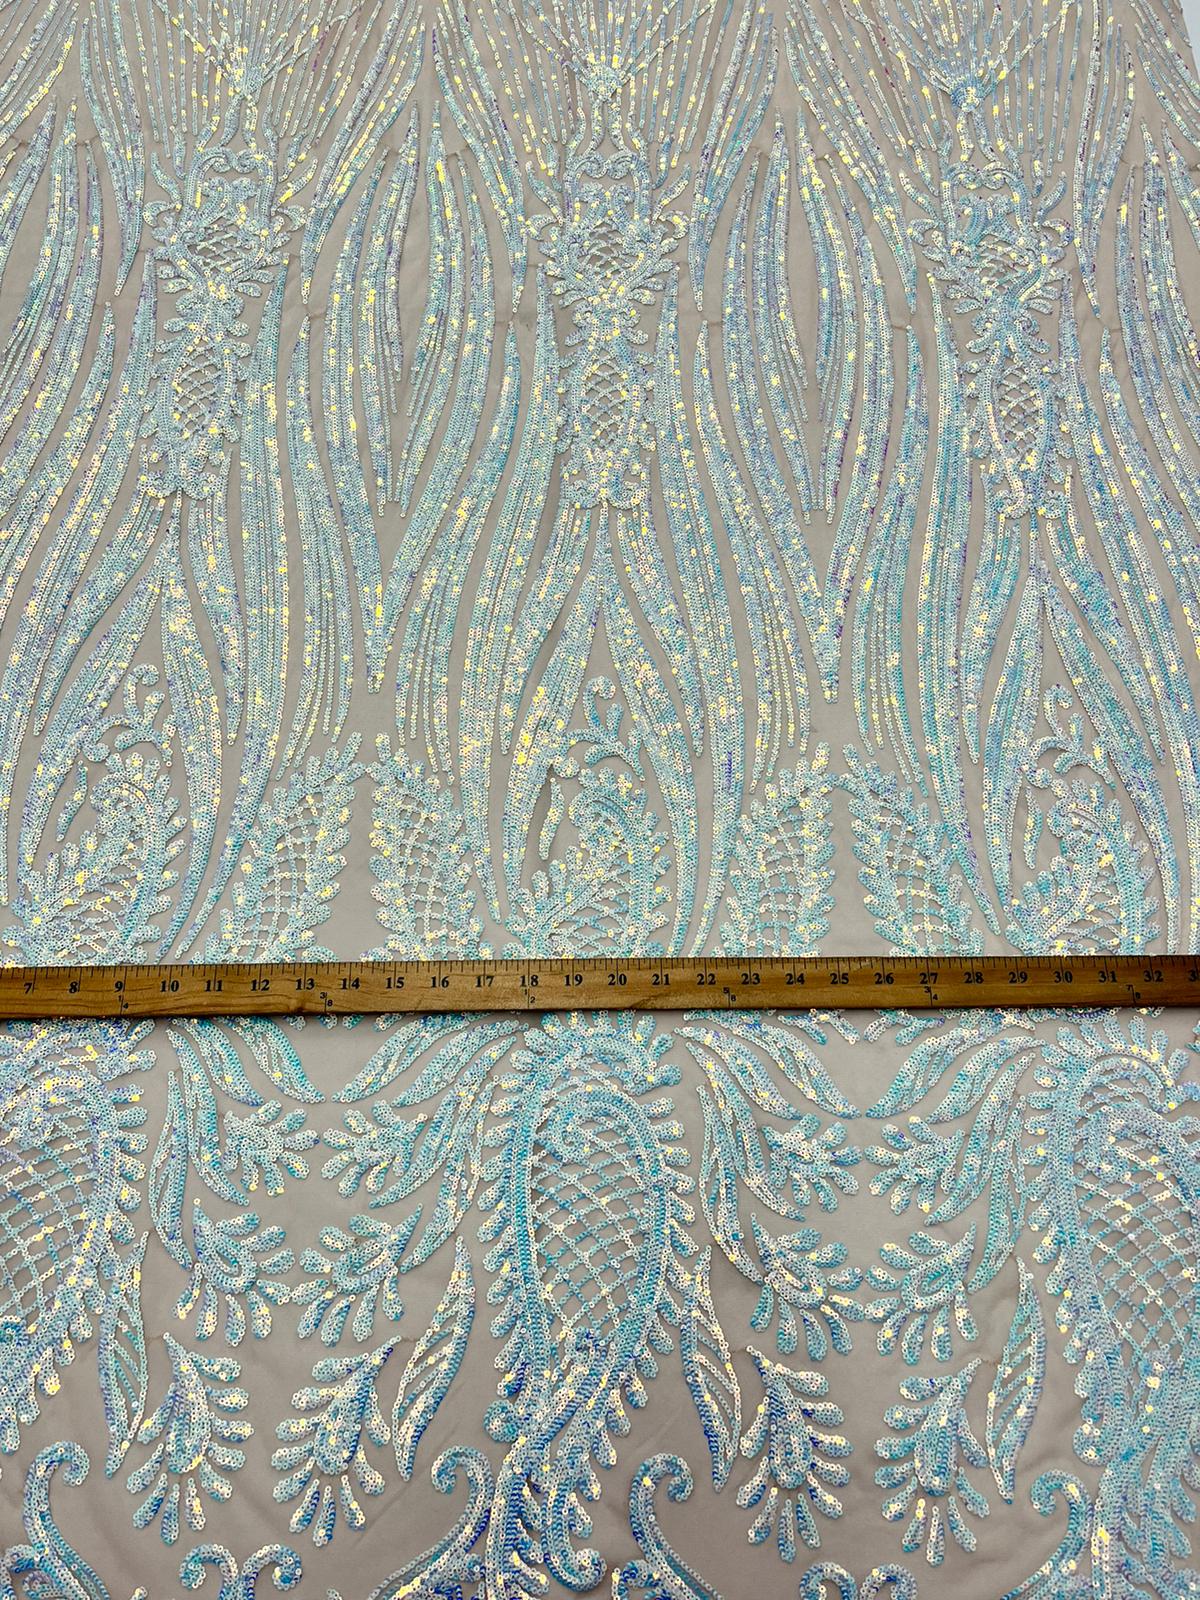 Geometric 4 Way Stretch Sequin Fabric | Baby Blue | Embroidered FabricICE FABRICSICE FABRICSSample (Swatch)Geometric 4 Way Stretch Sequin Fabric | Baby Blue | Embroidered Fabric ICE FABRICS